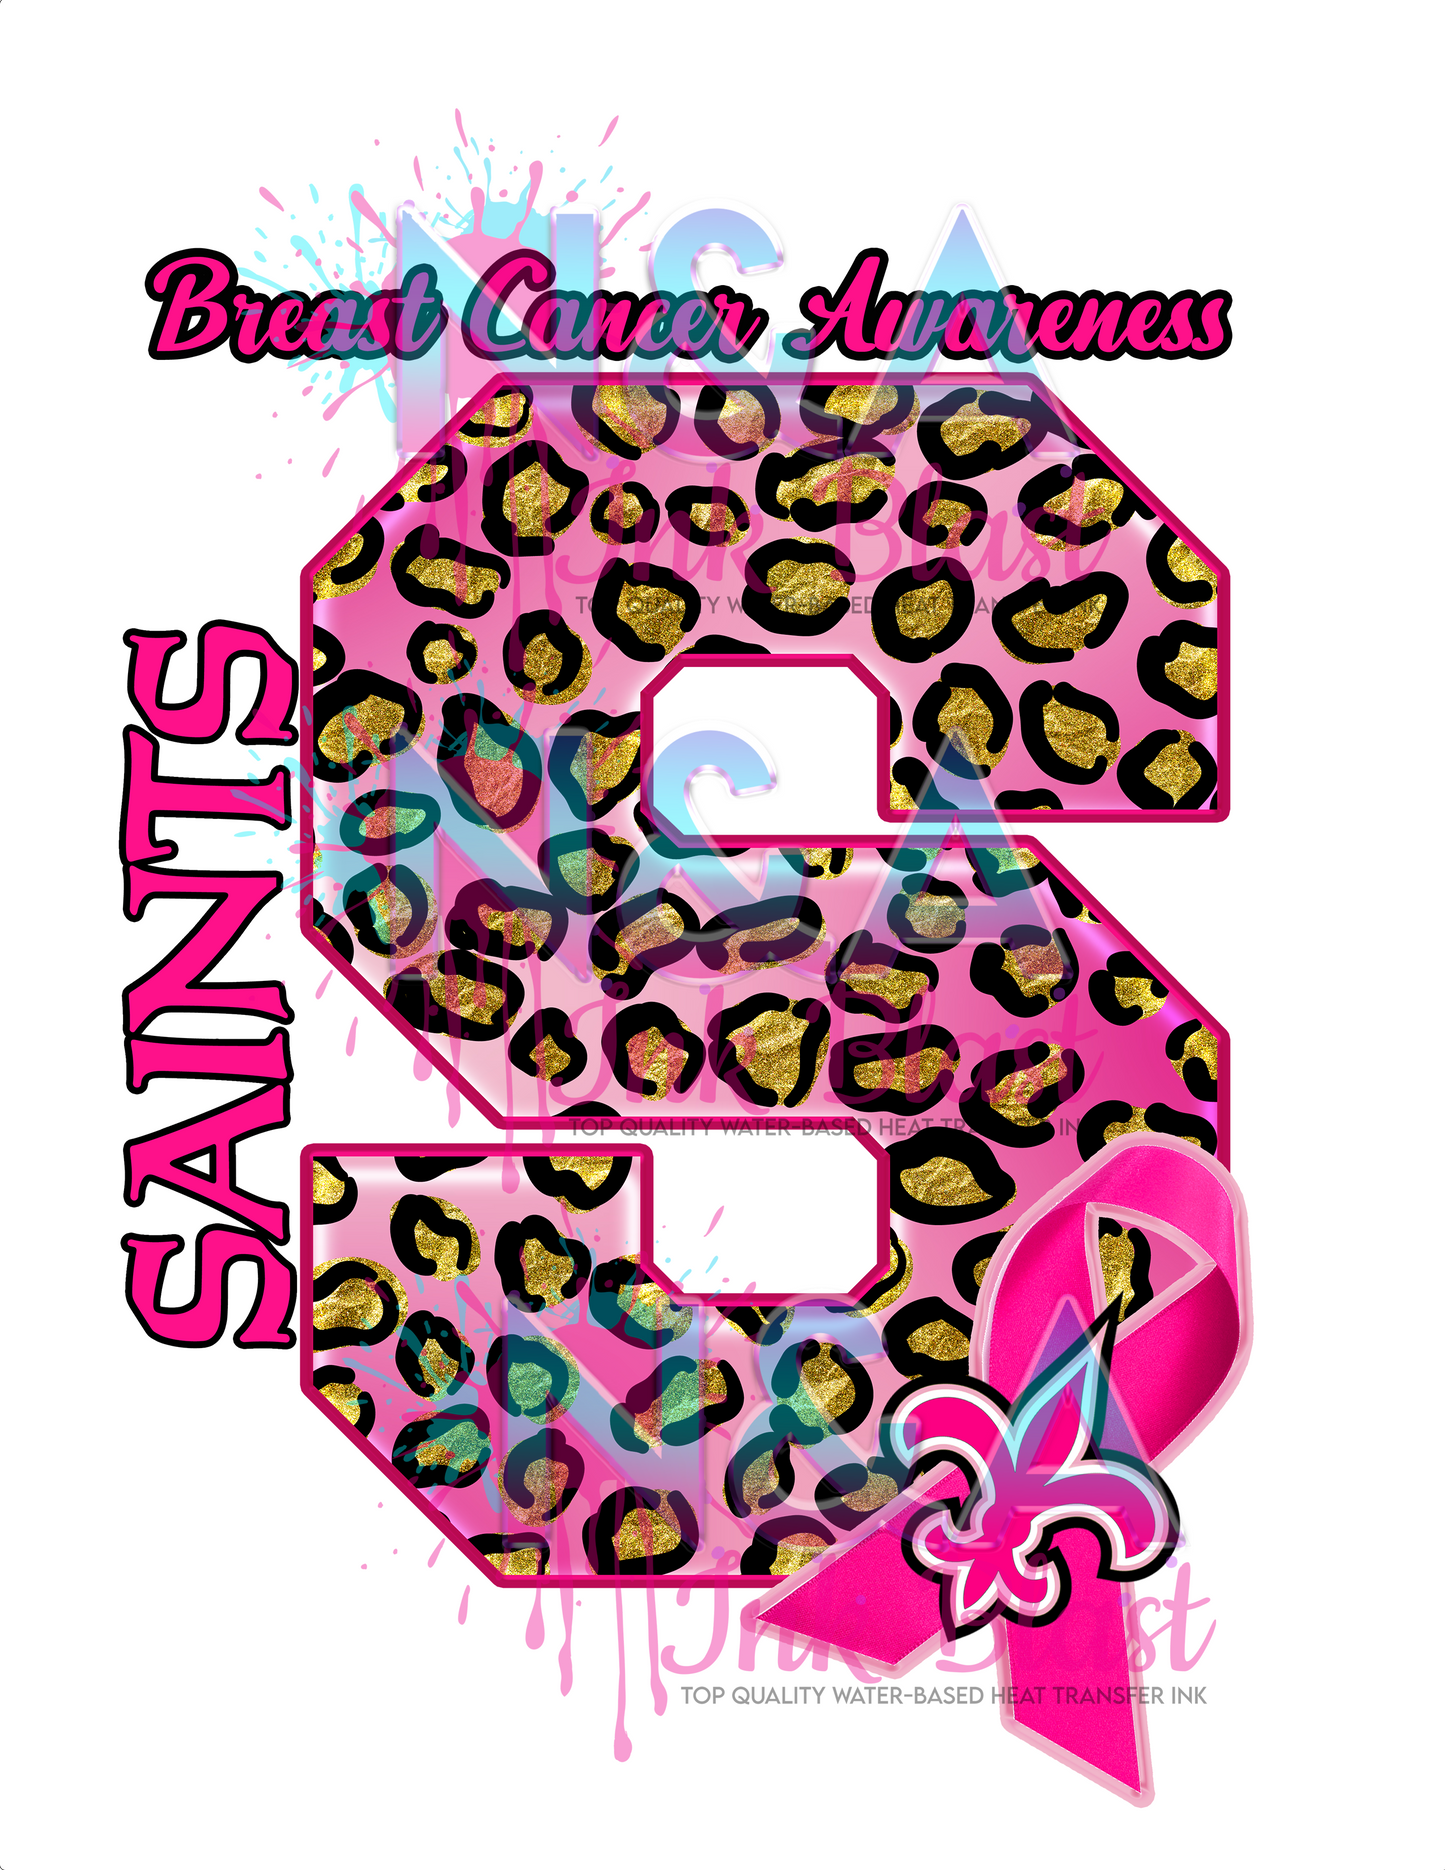 saints breast cancer shirt